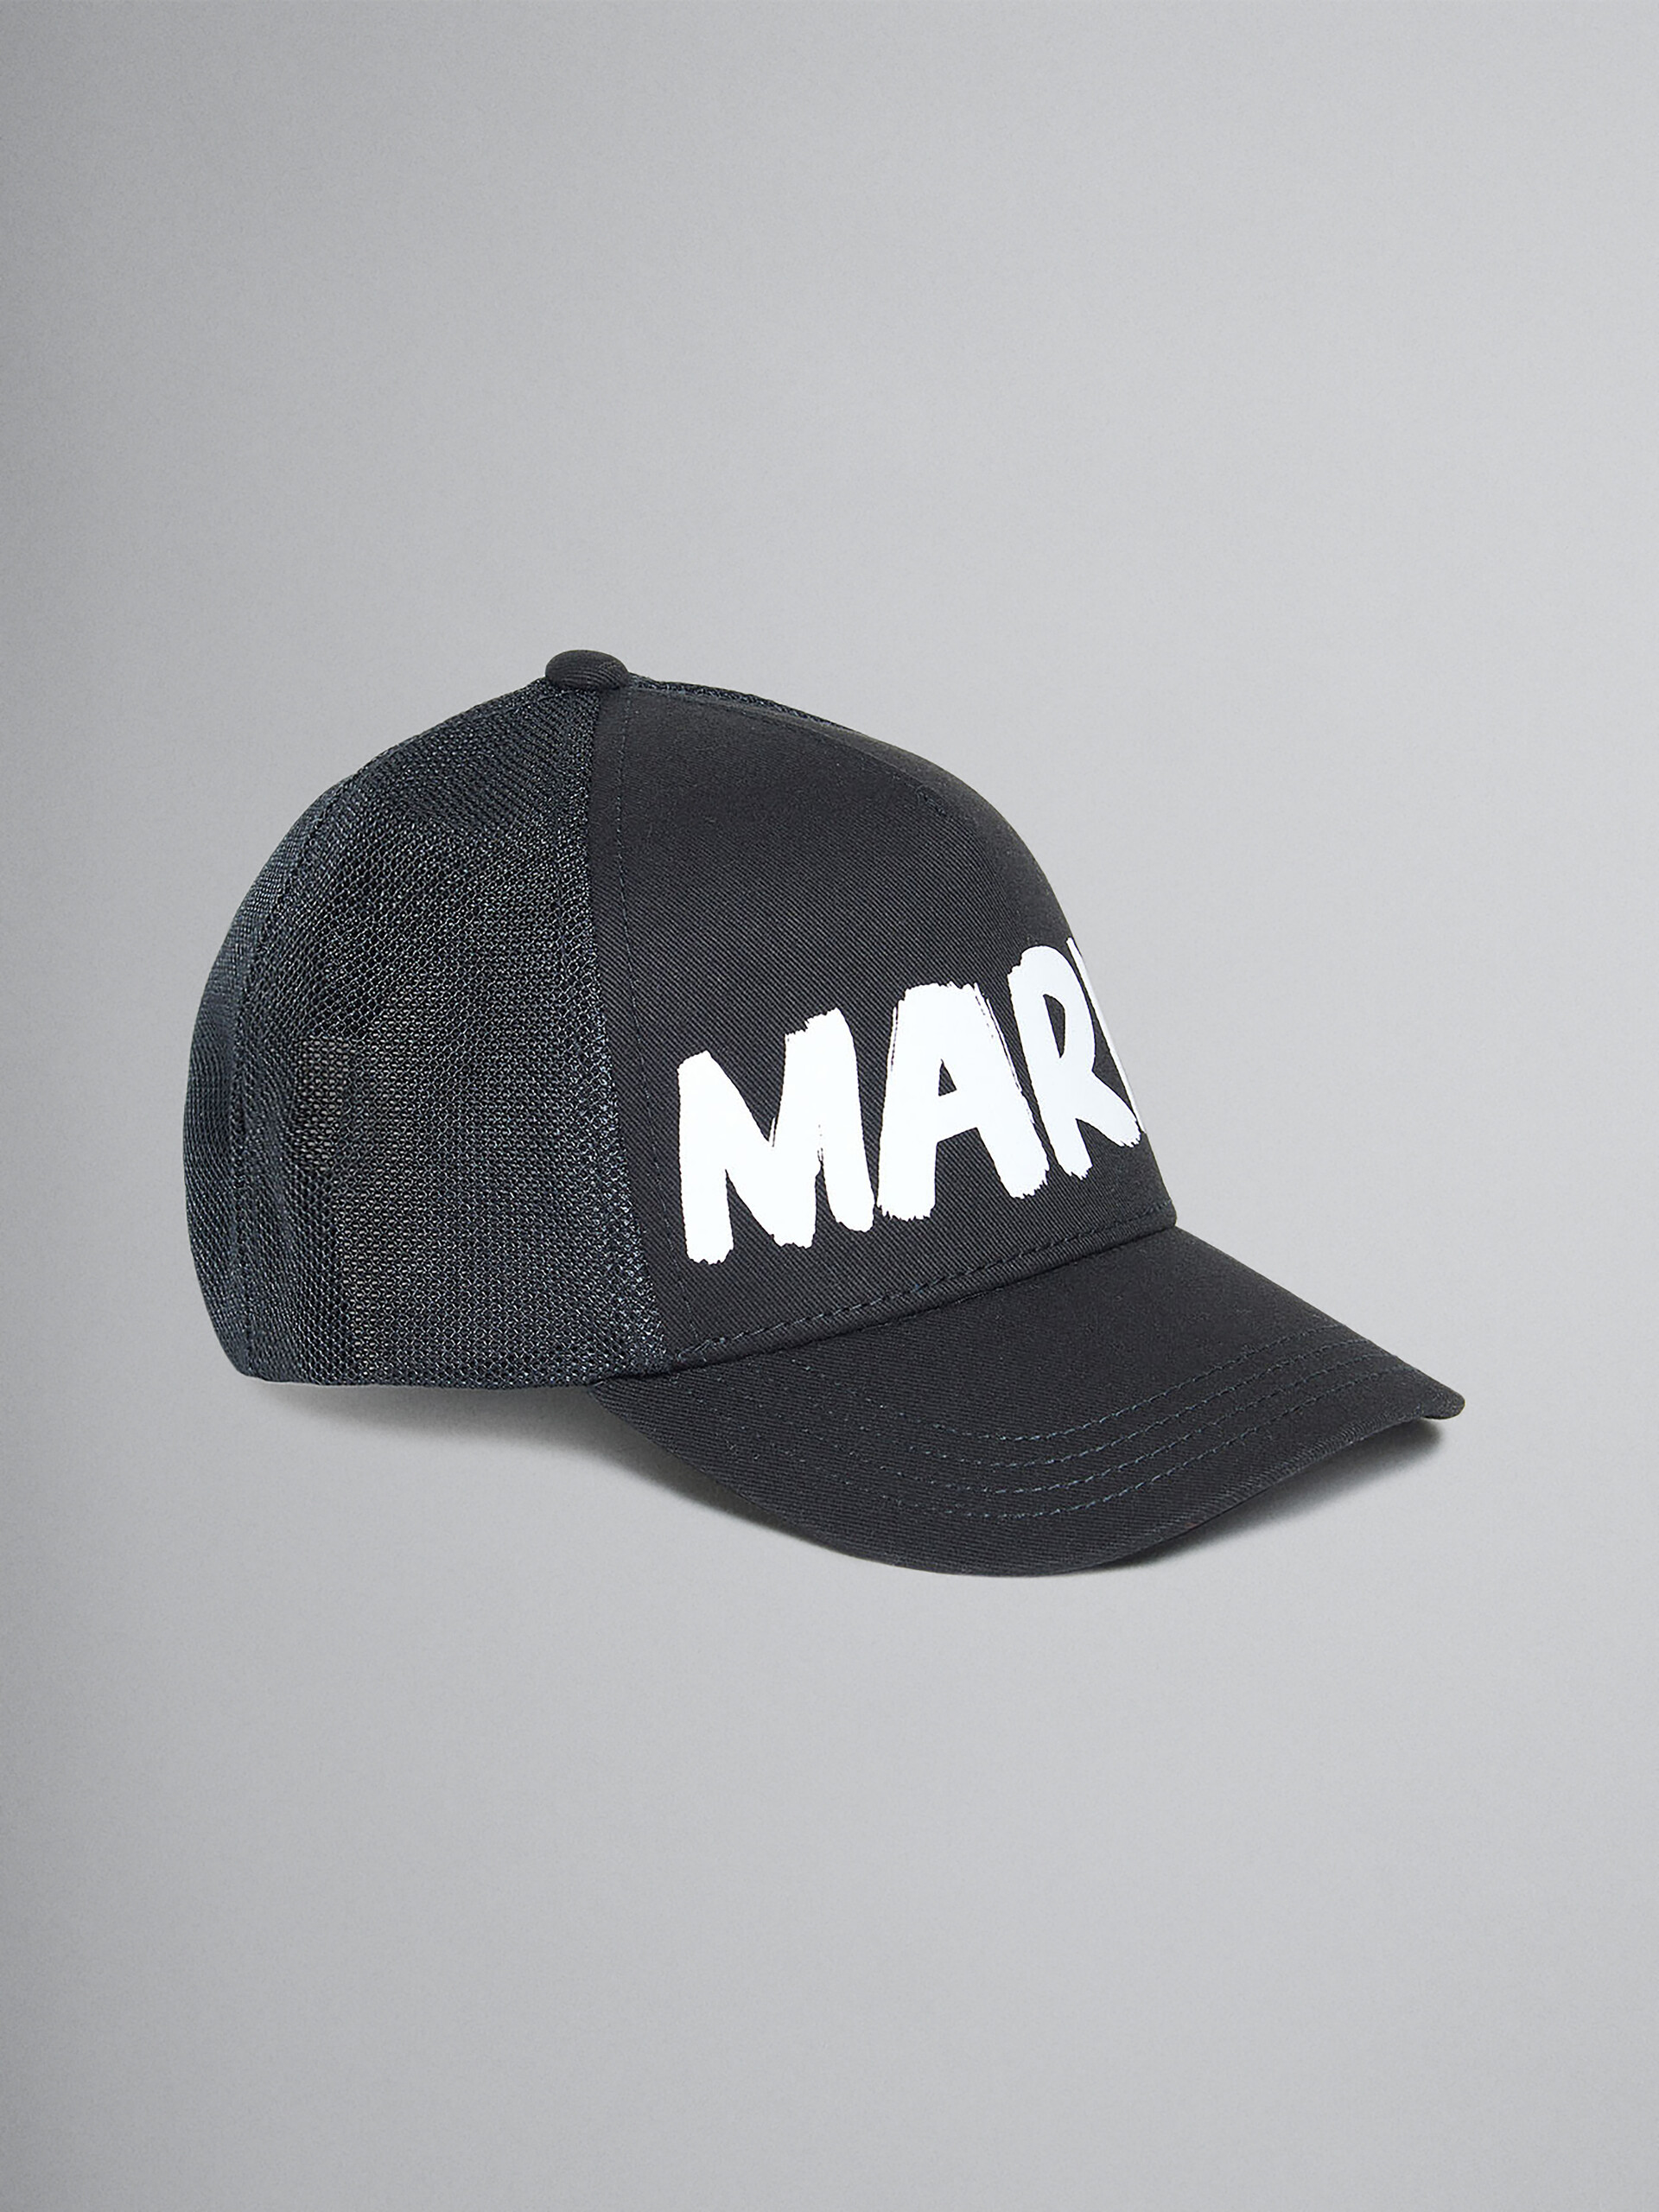 Black trucker hat with Brush logo - Caps - Image 1